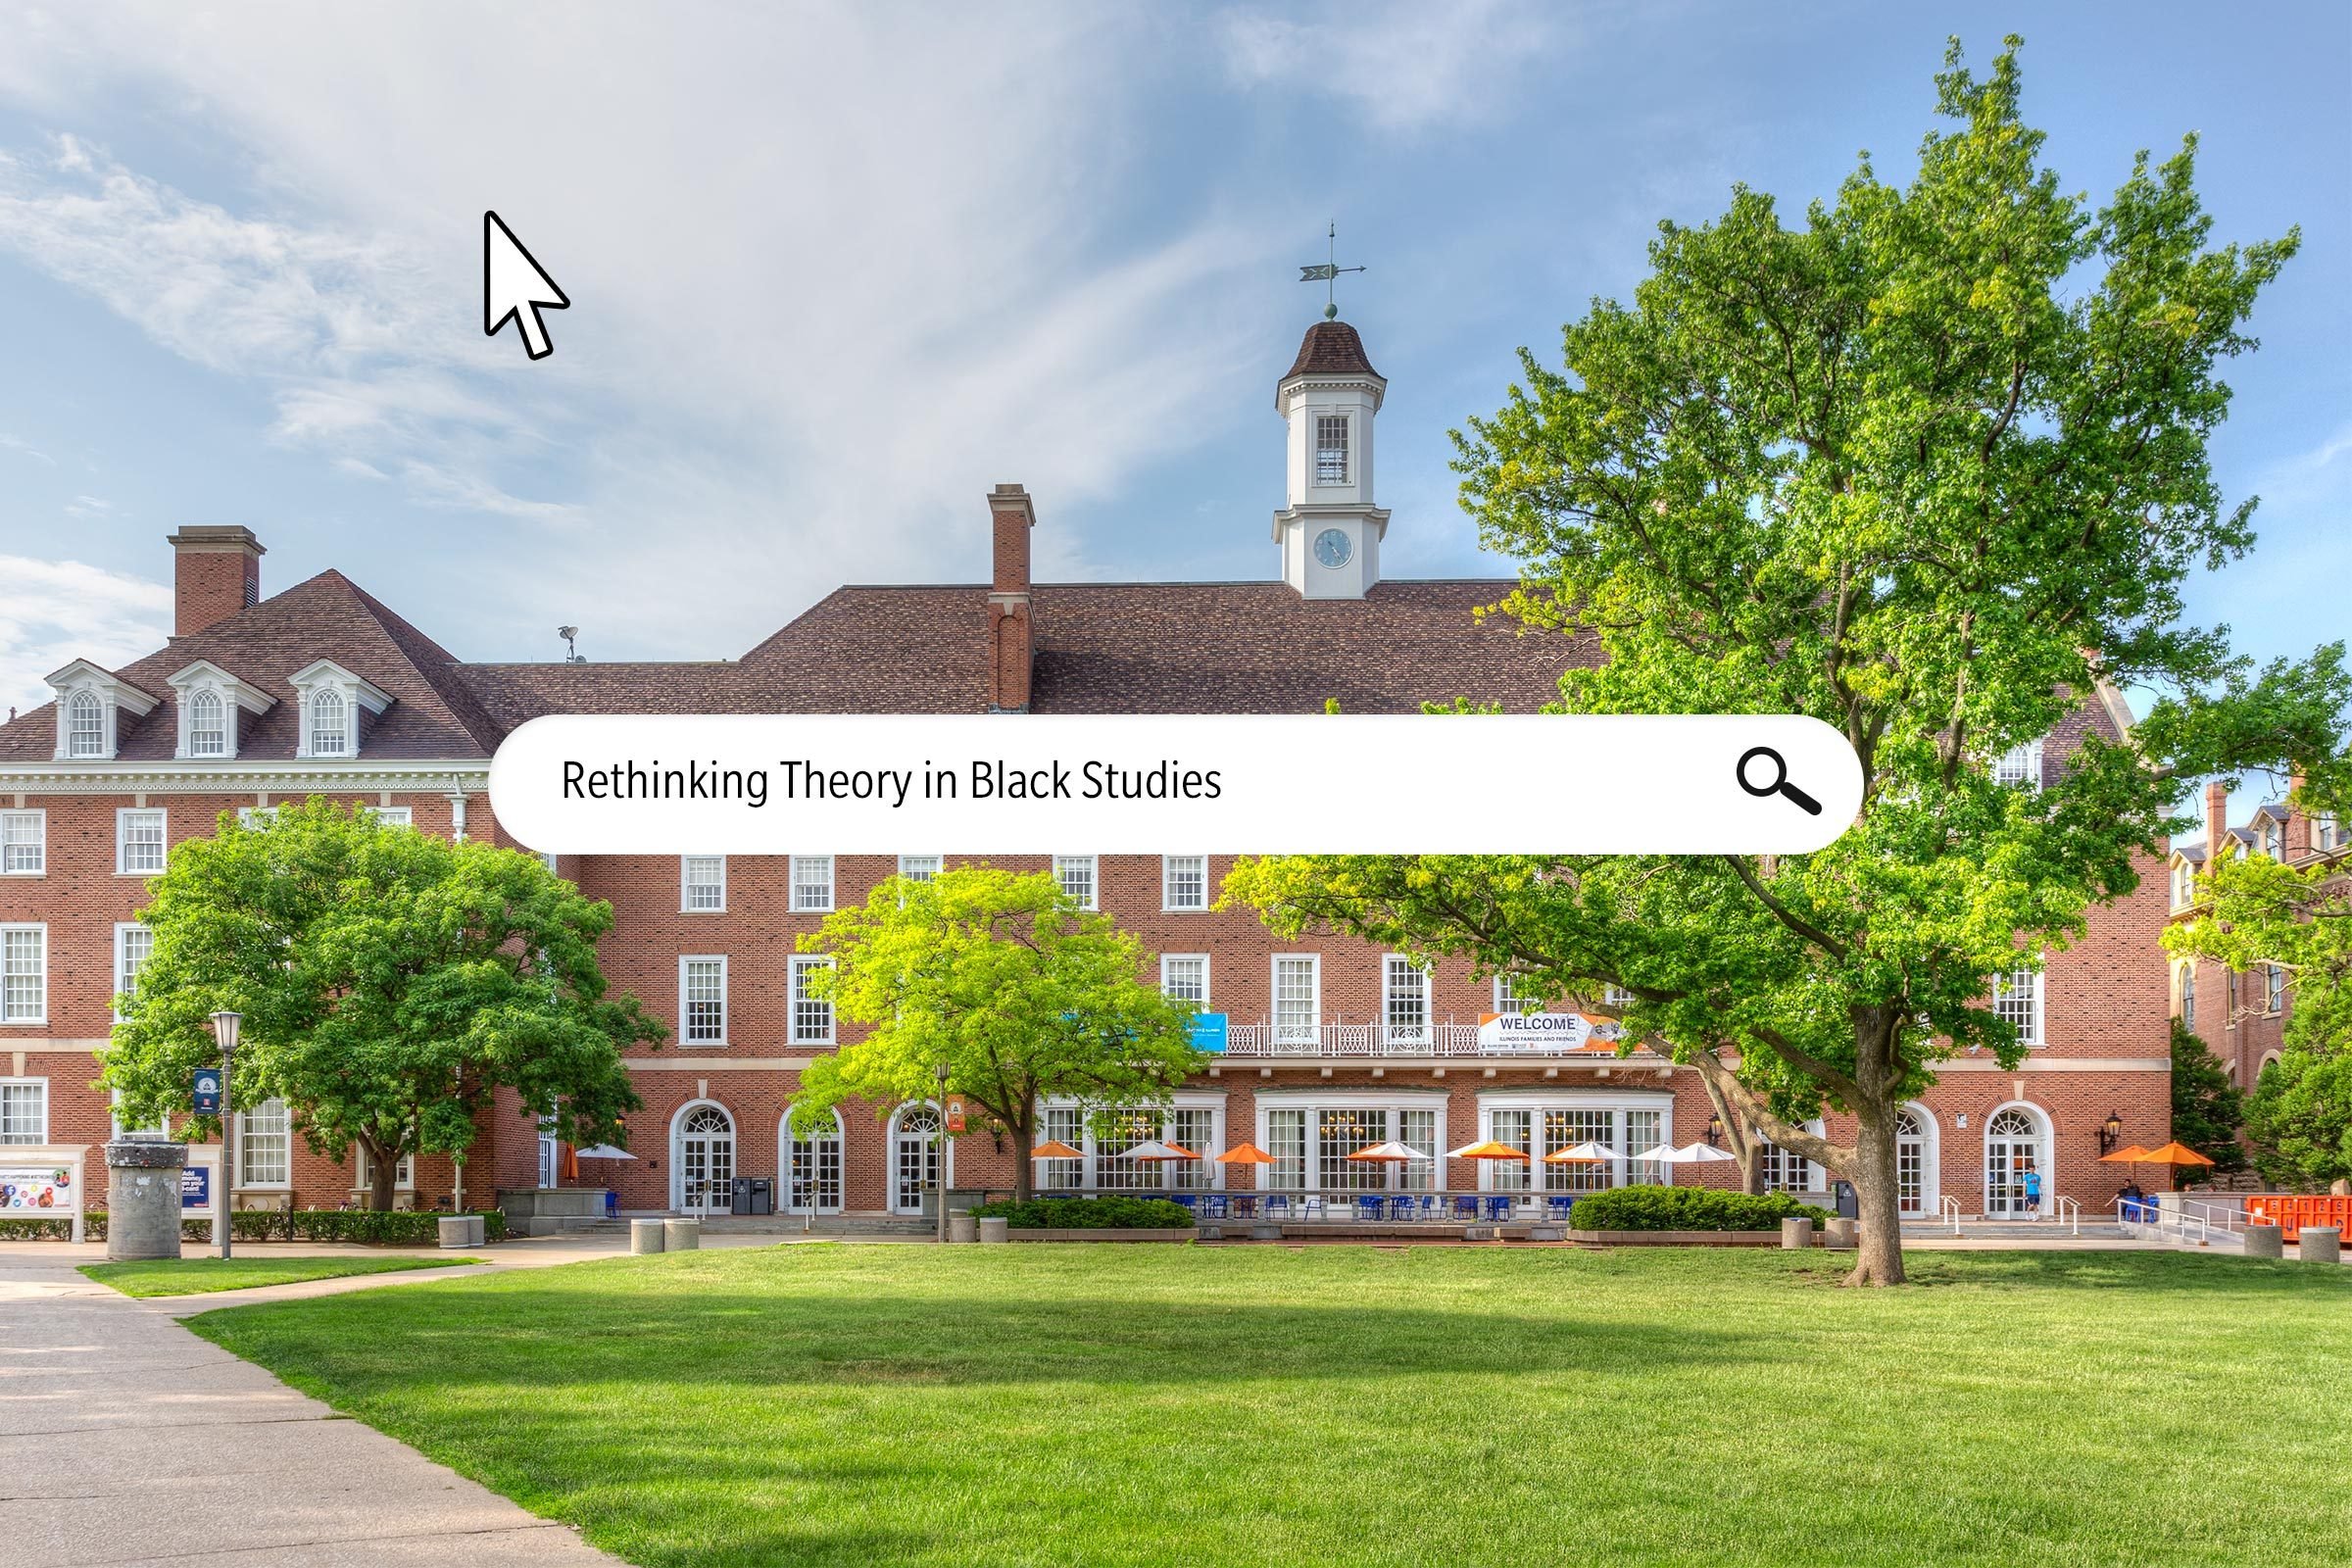 Rethinking Theory in Black Studies (University of Illinois, Urbana)